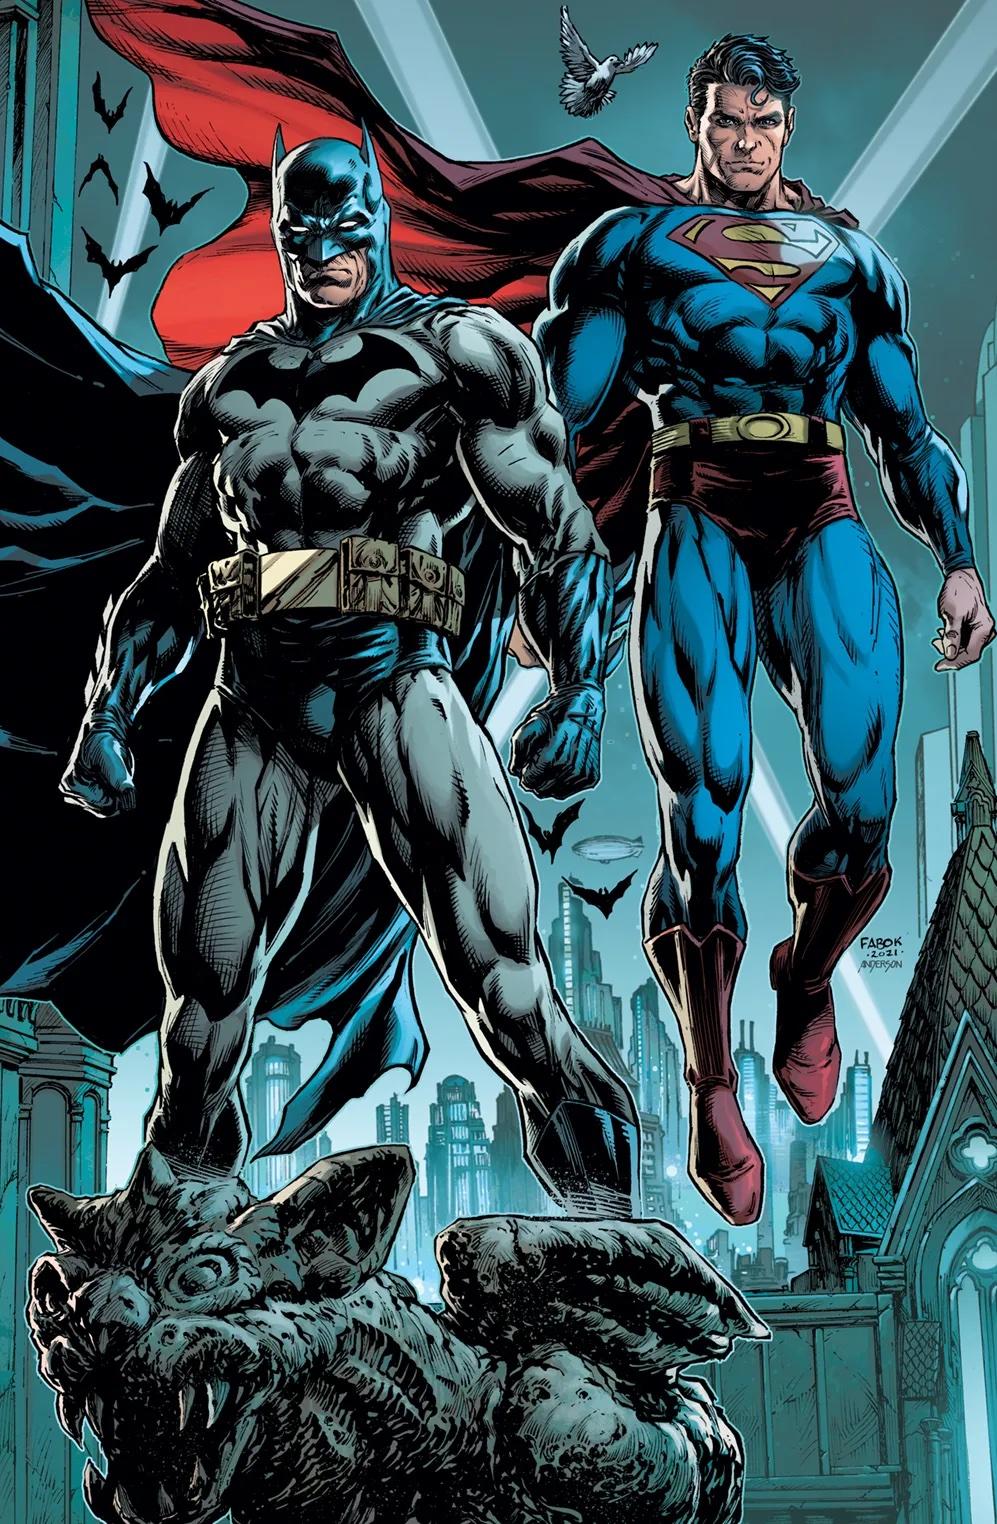 batman-superman-worlds-finest-cv1-jay-fabok-open-order-variant.jpg